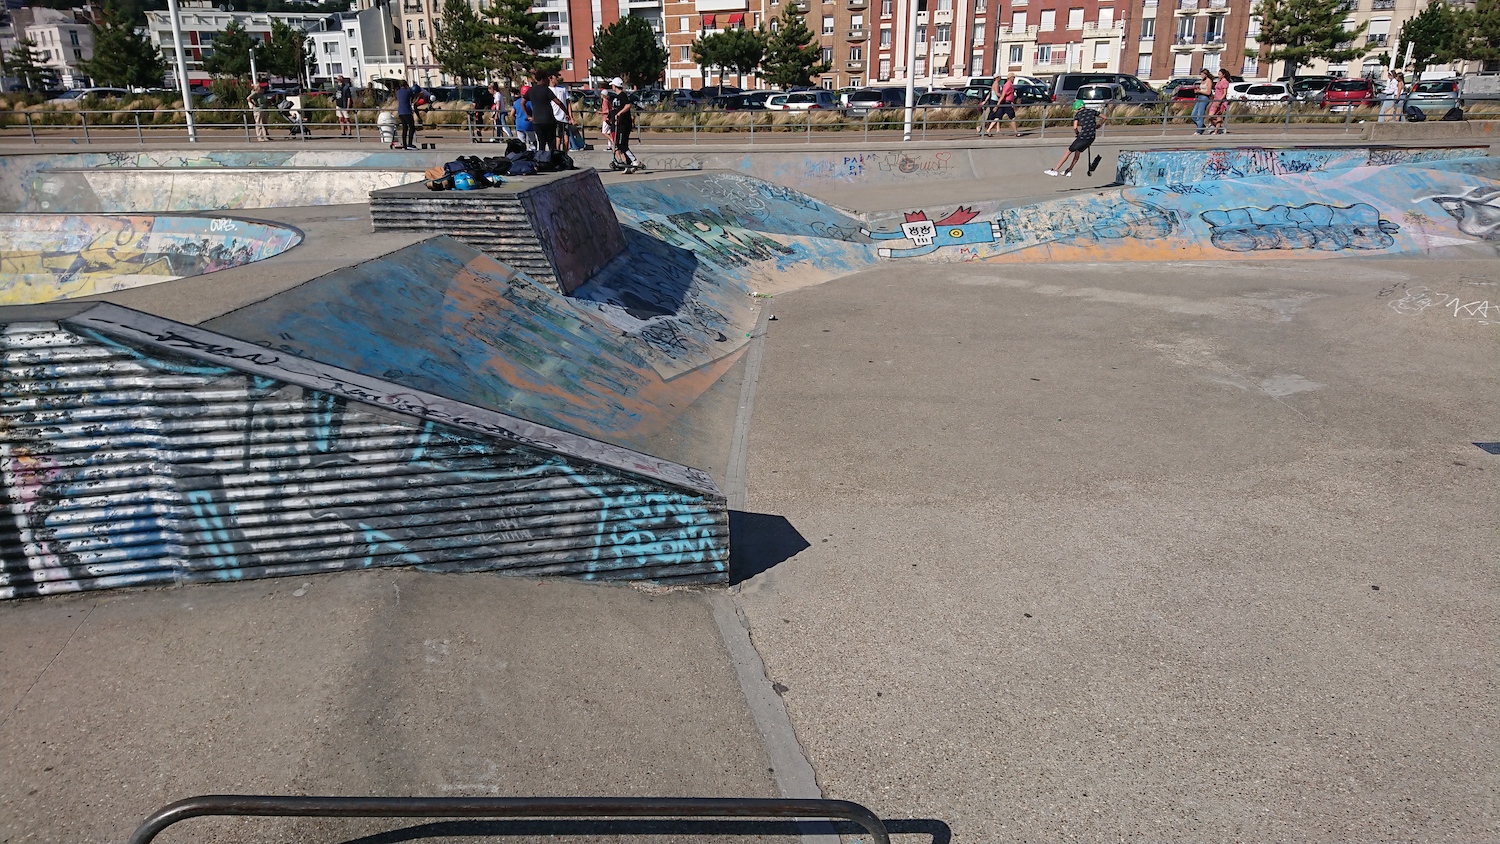 Le Havre skatepark